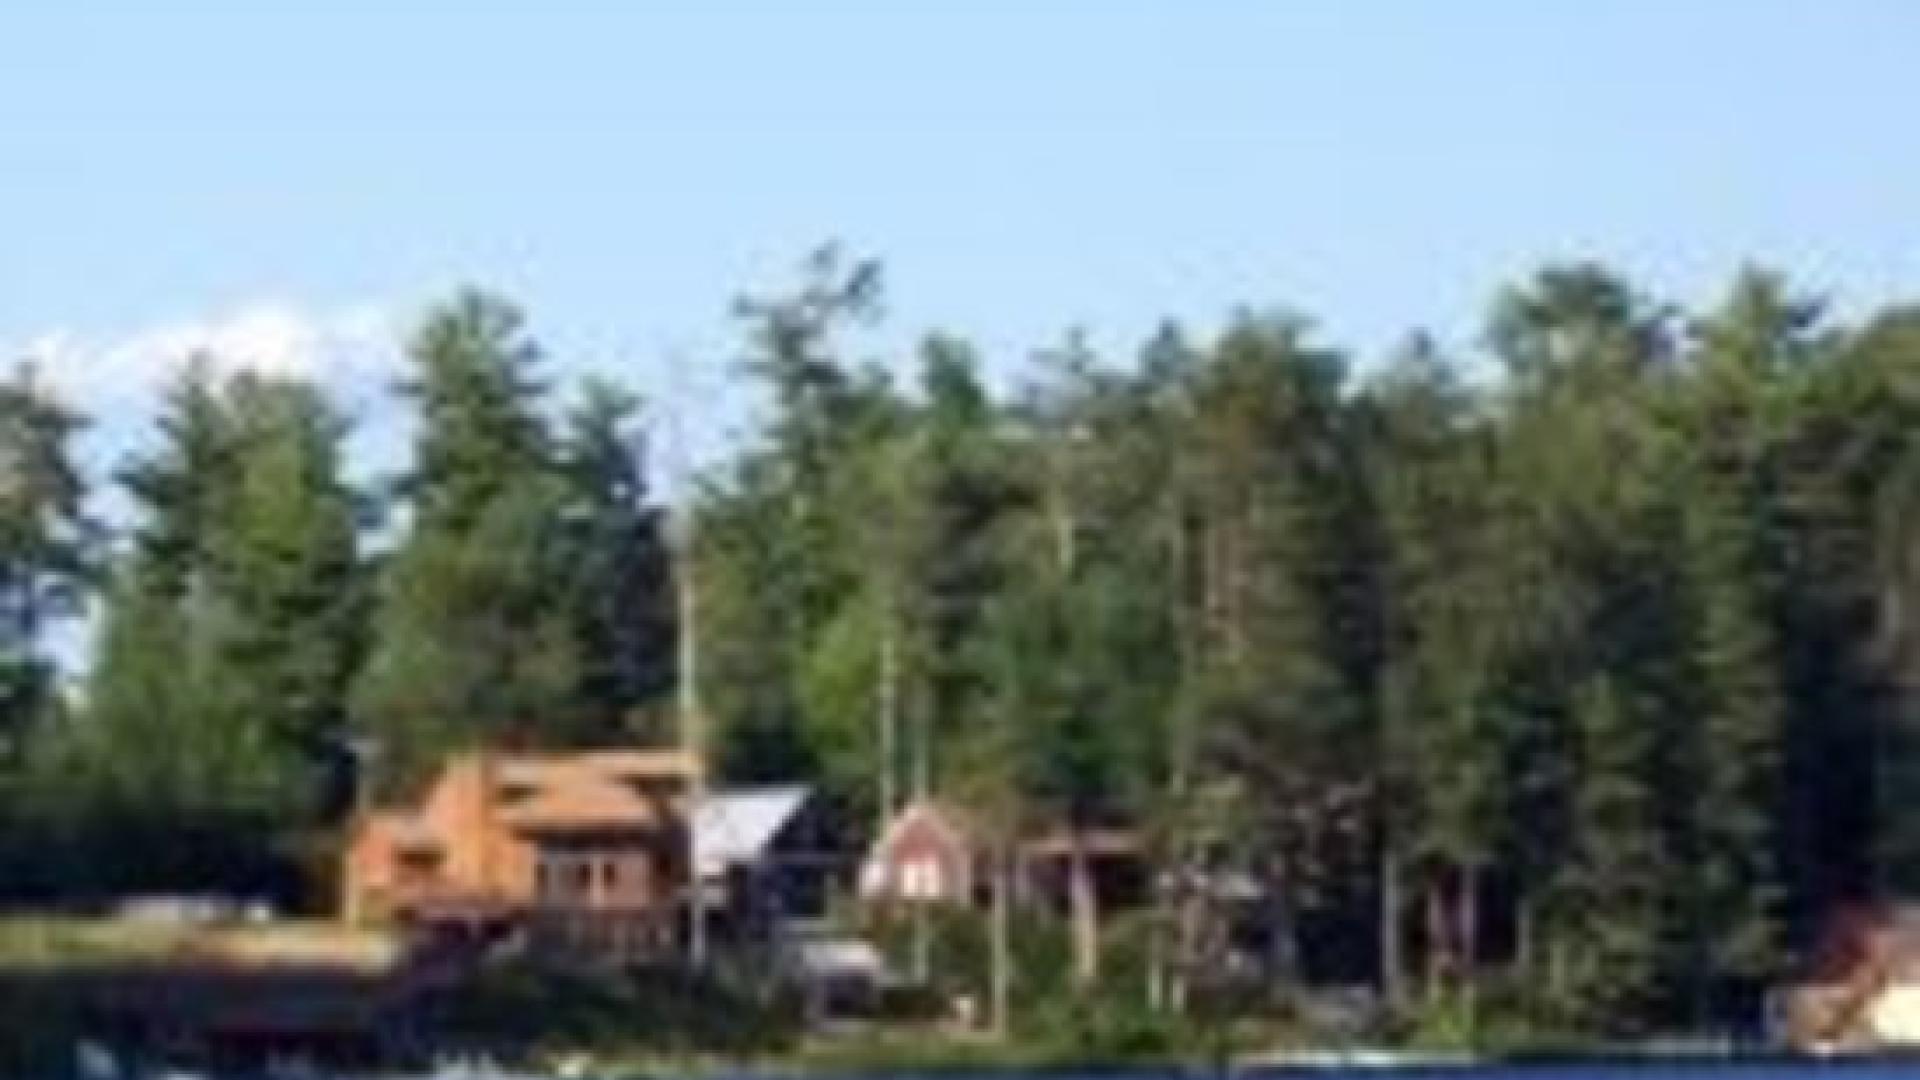 Gleasman's Lakefront Cottages